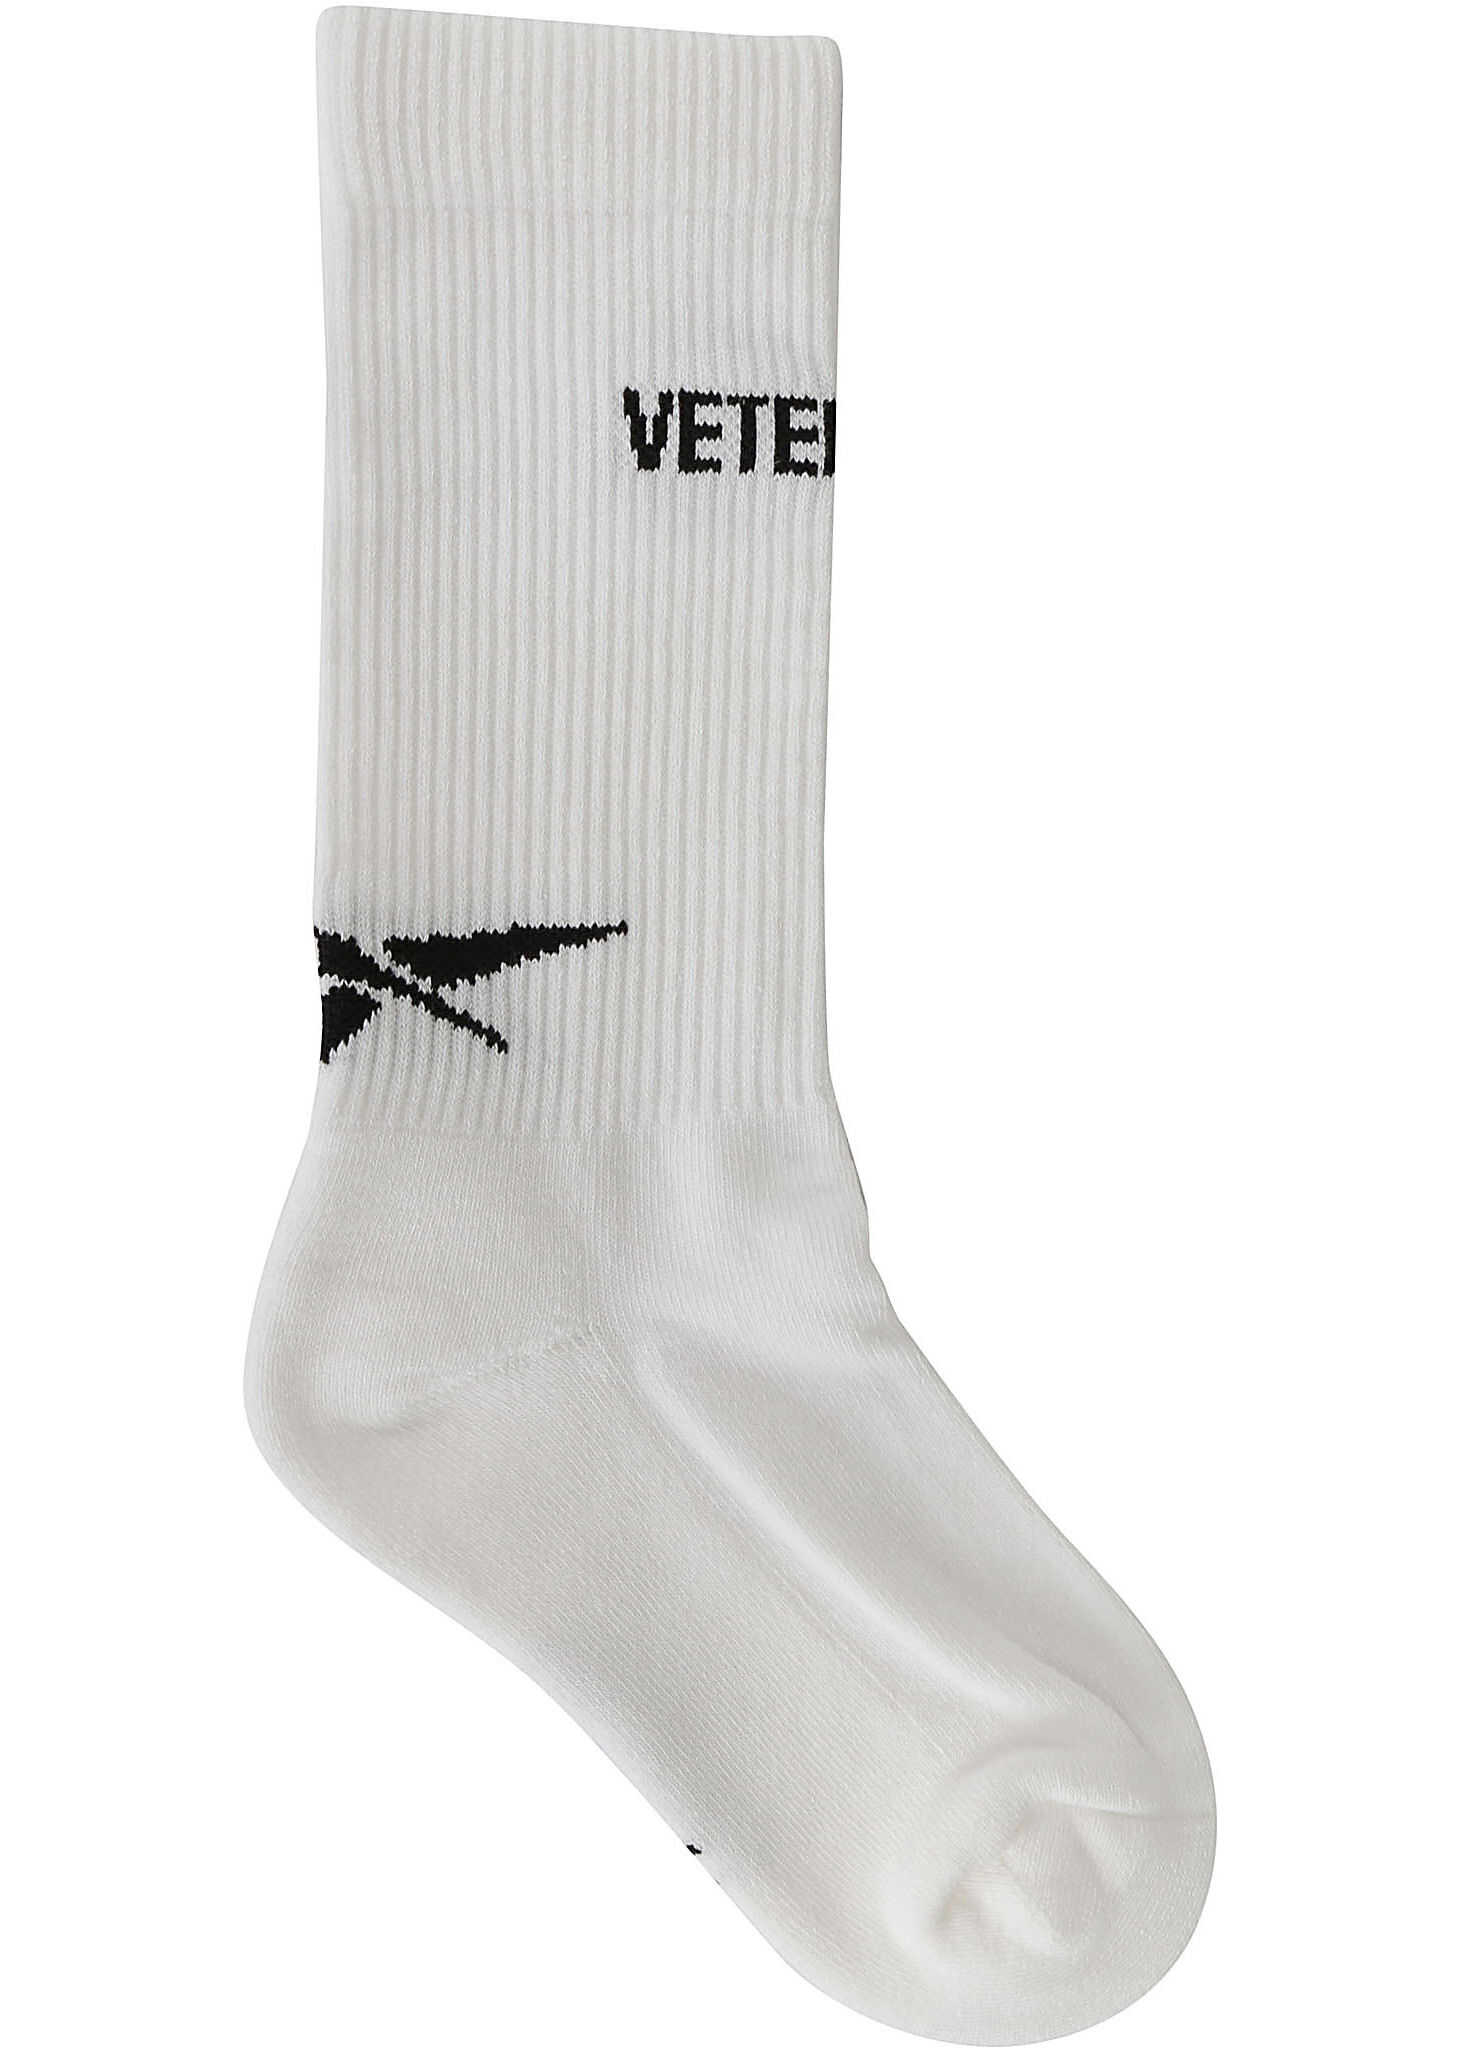 Vetements x Reebok Socks WHITE BLACK image5